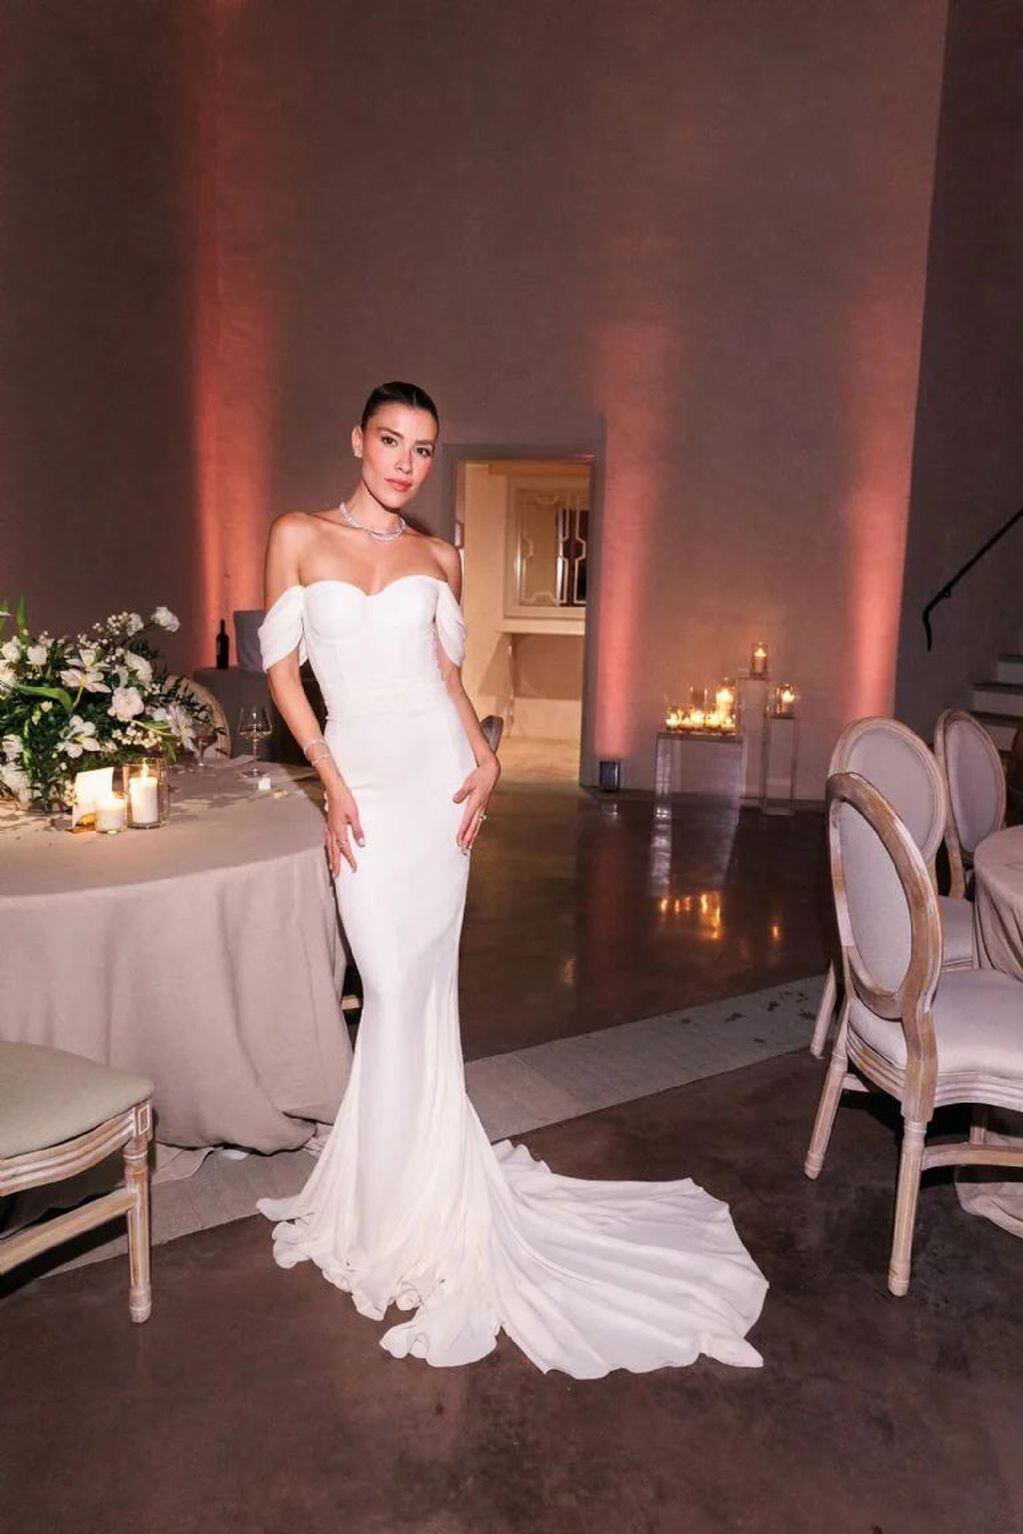 La boda de Michelle Salas. 
Fotos: German Larkin, Vogue México